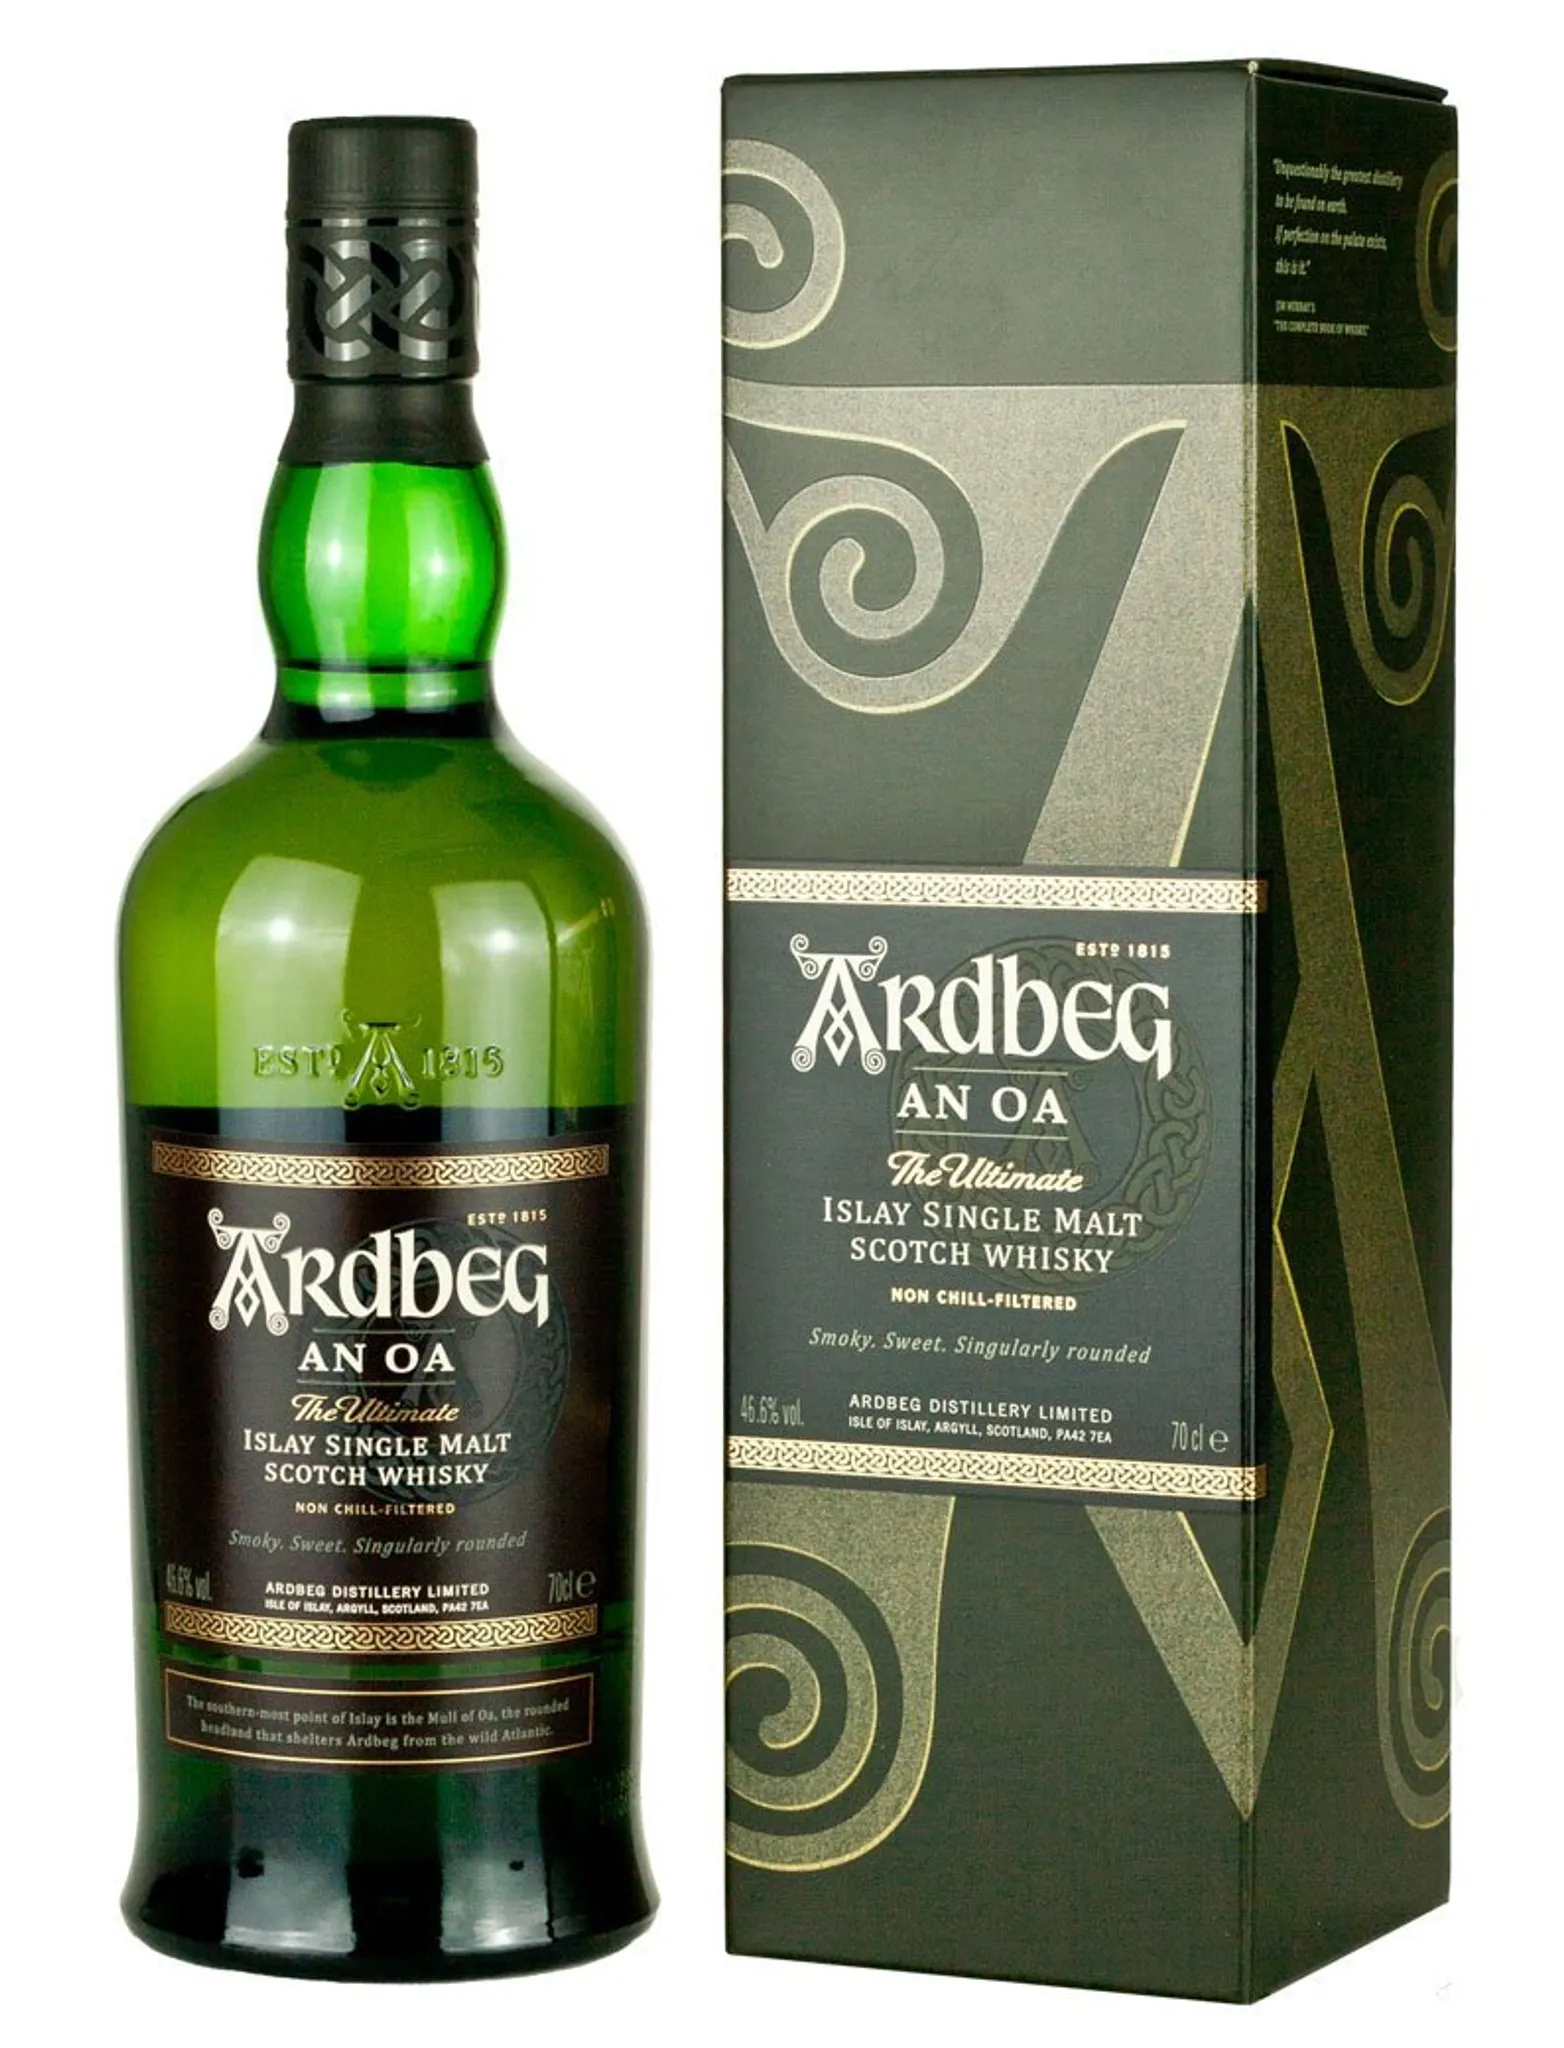 Geschenkpackung Whisky The Islay Single Oa An in Scotch Ardbeg Ultimate Malt